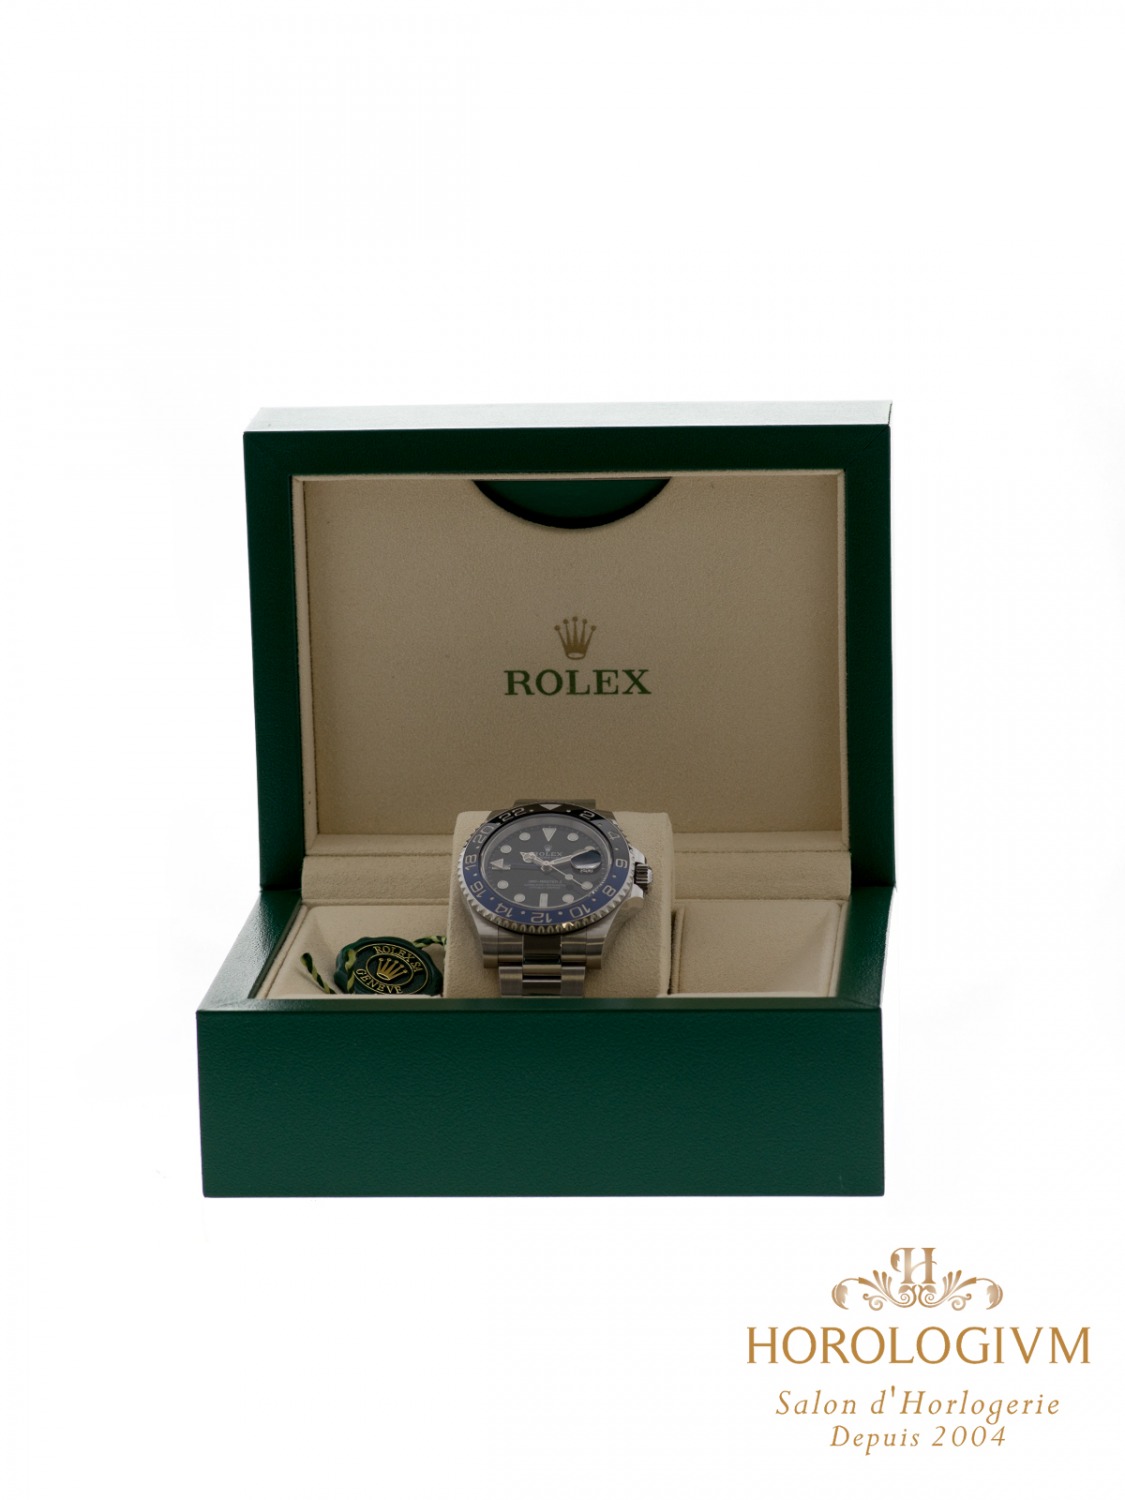 Rolex GMT-Master II “Batman” Ref. 116710BLNR watch, silver (case) and silver & black + blue cerachrom  / ceramic (bezel)